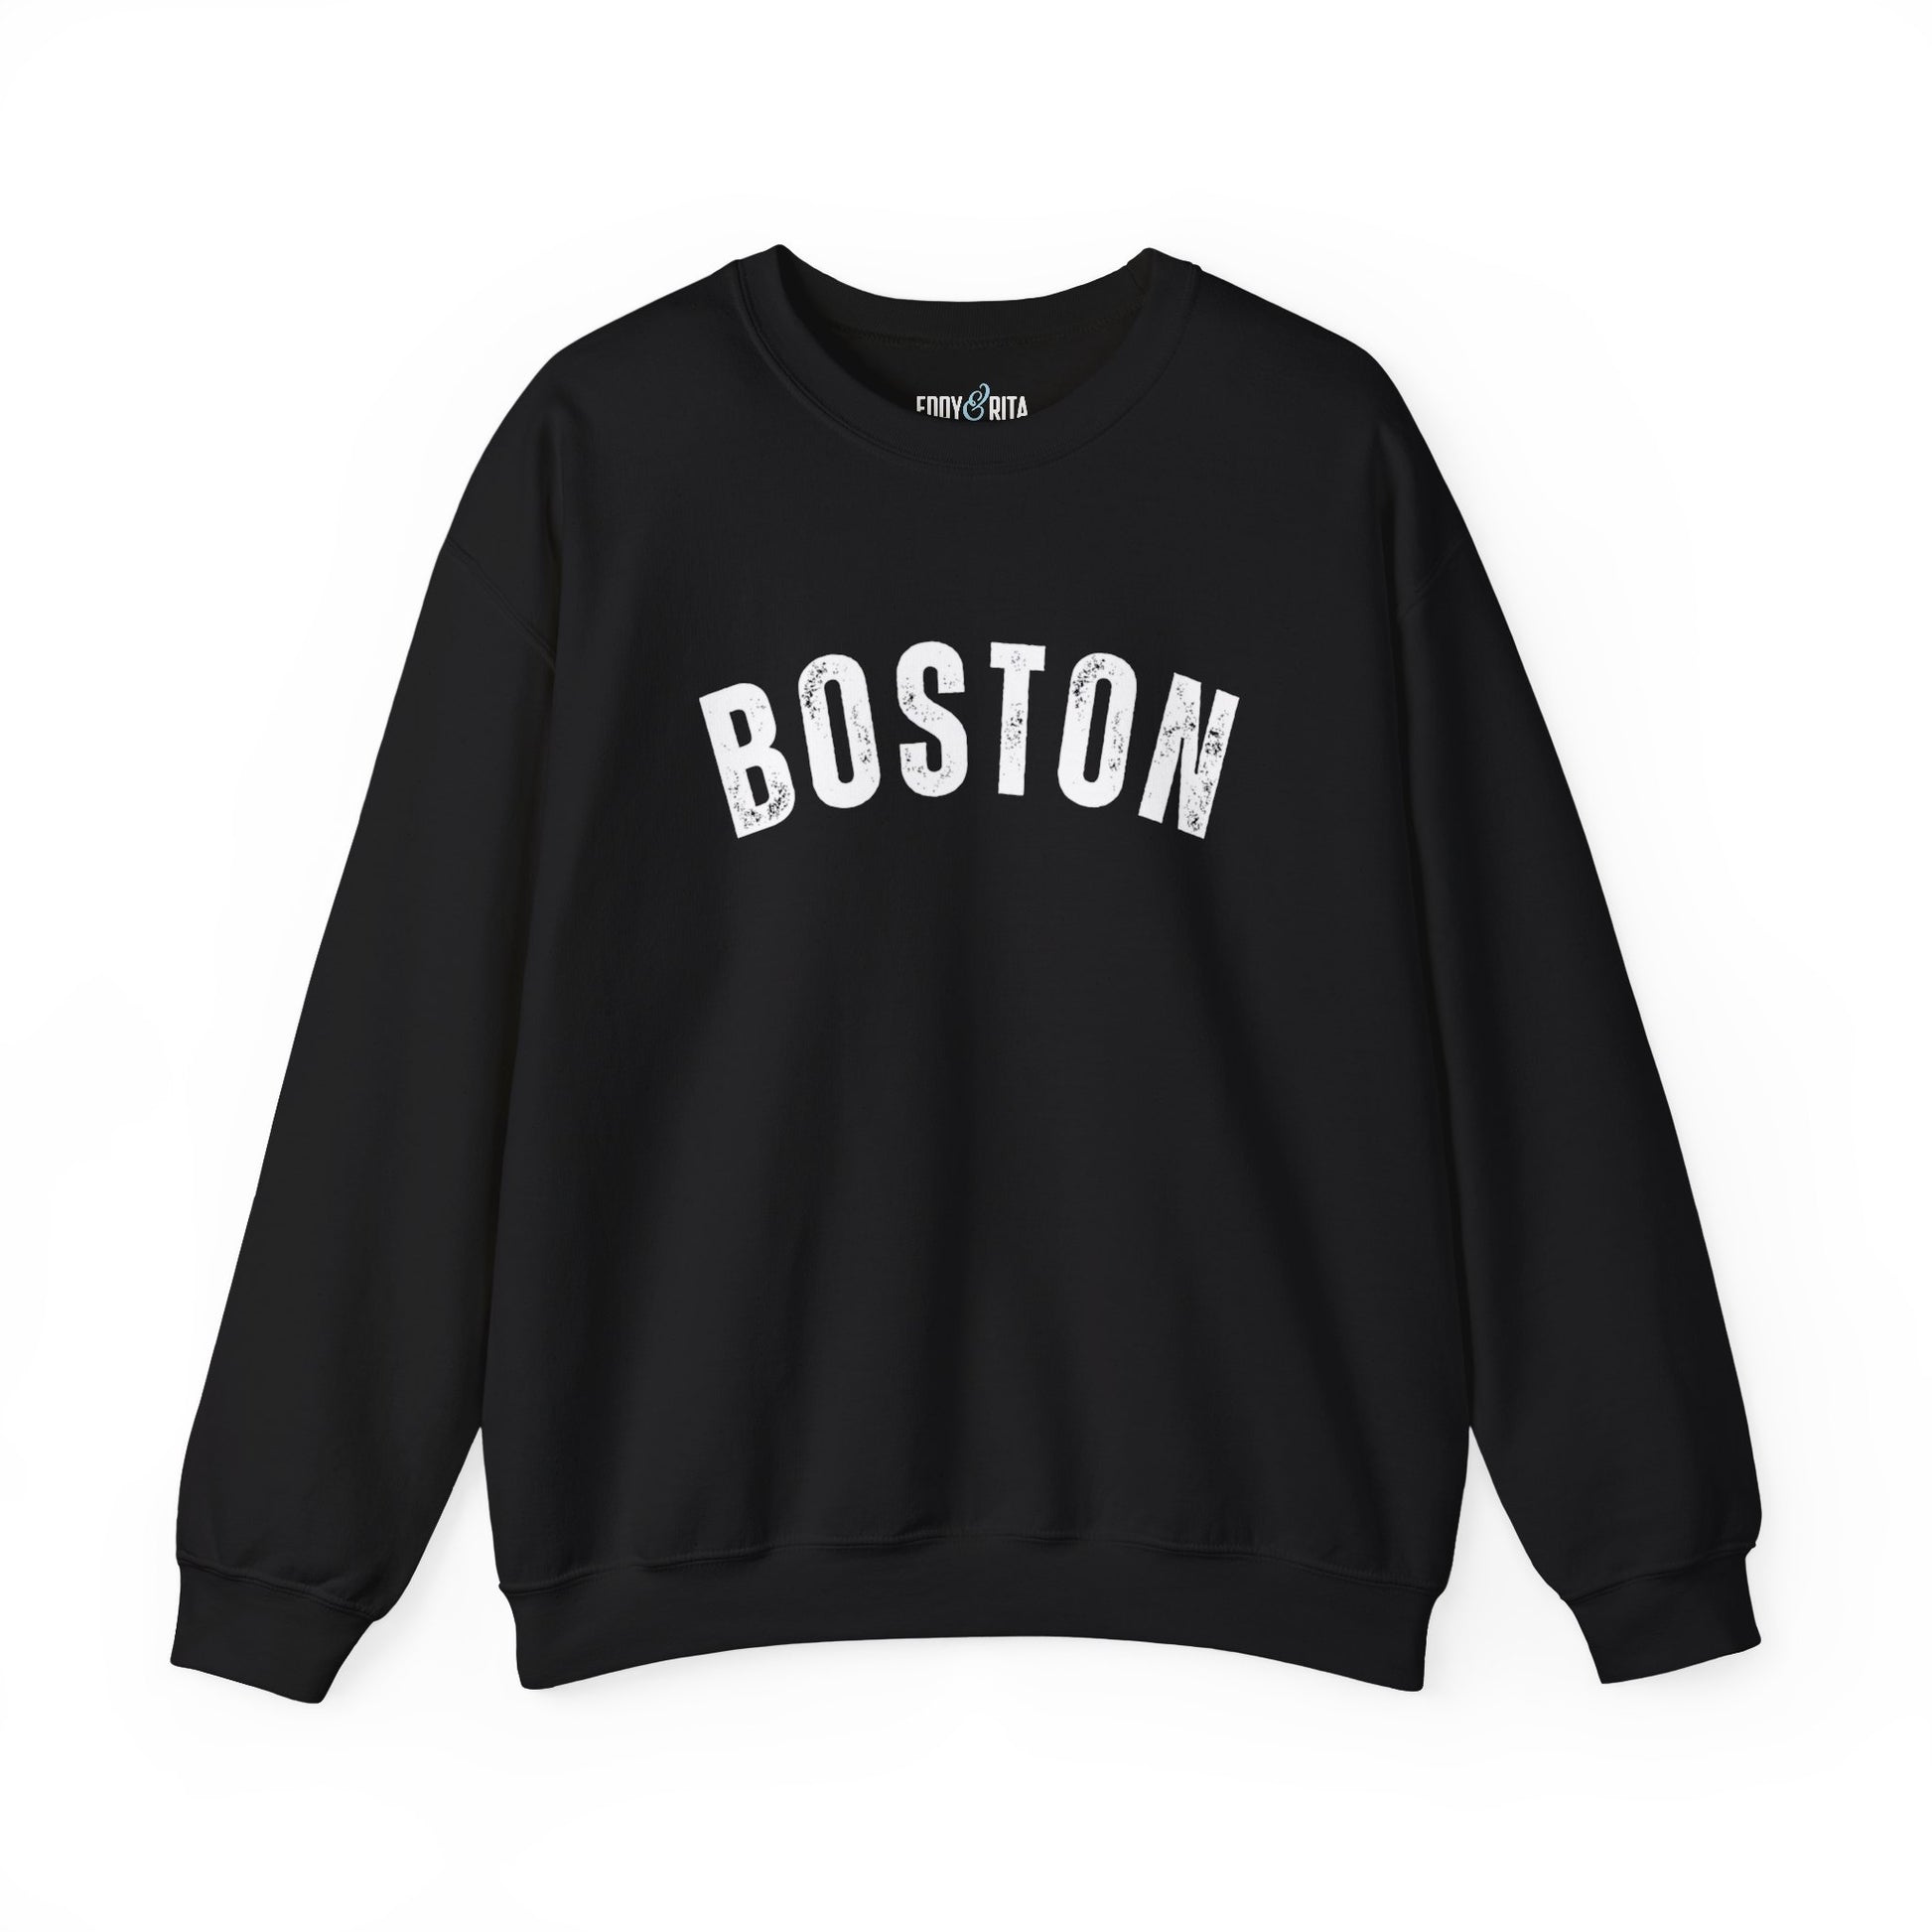 Boston Women's Sweatshirt - Eddy and Rita